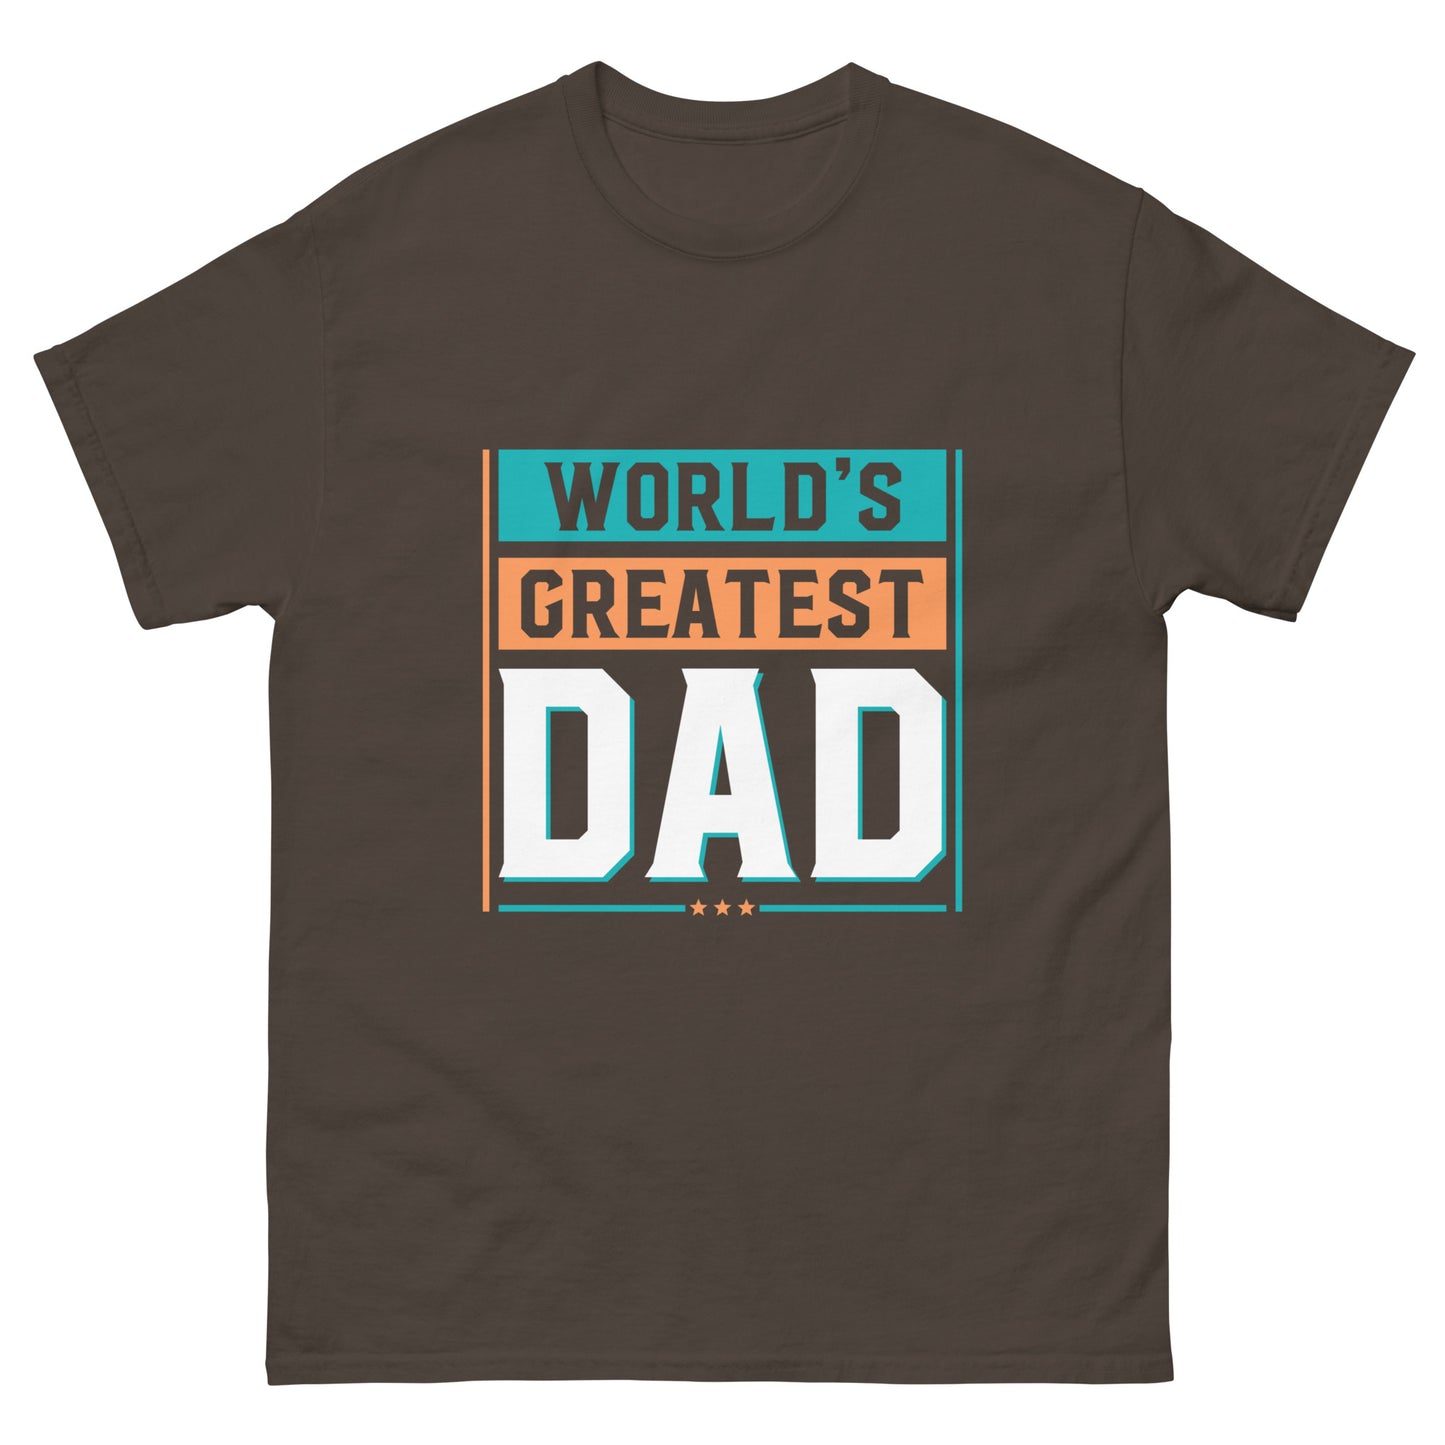 Dad classic T-Shirt